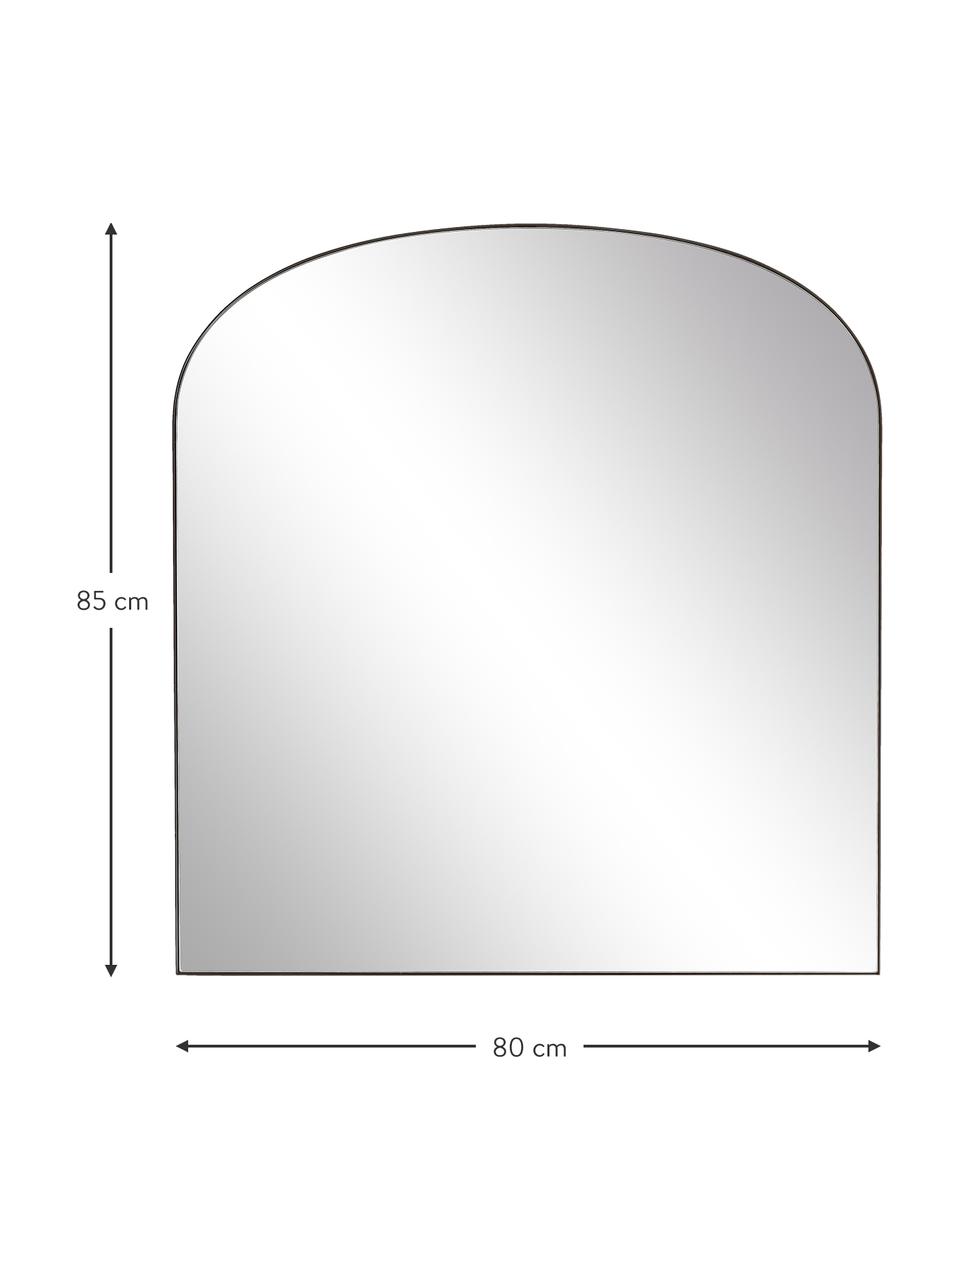 Nástěnné zrcadlo Francis, Černá, Š 80 cm, V 85 cm